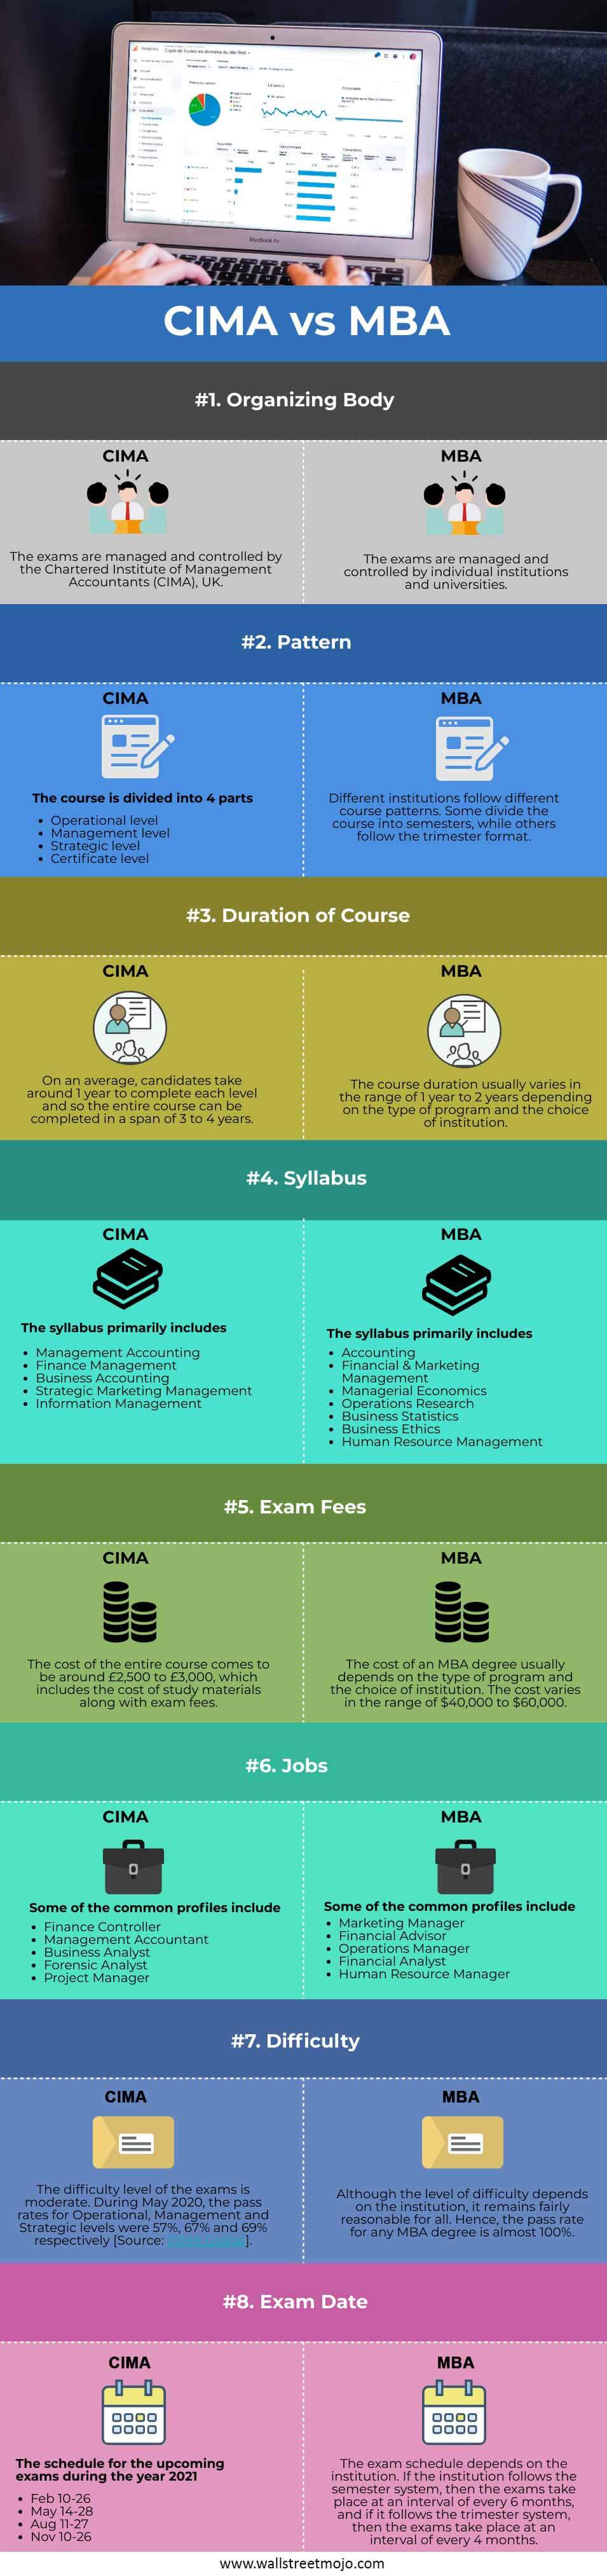 CIMA-vs-MBA-info